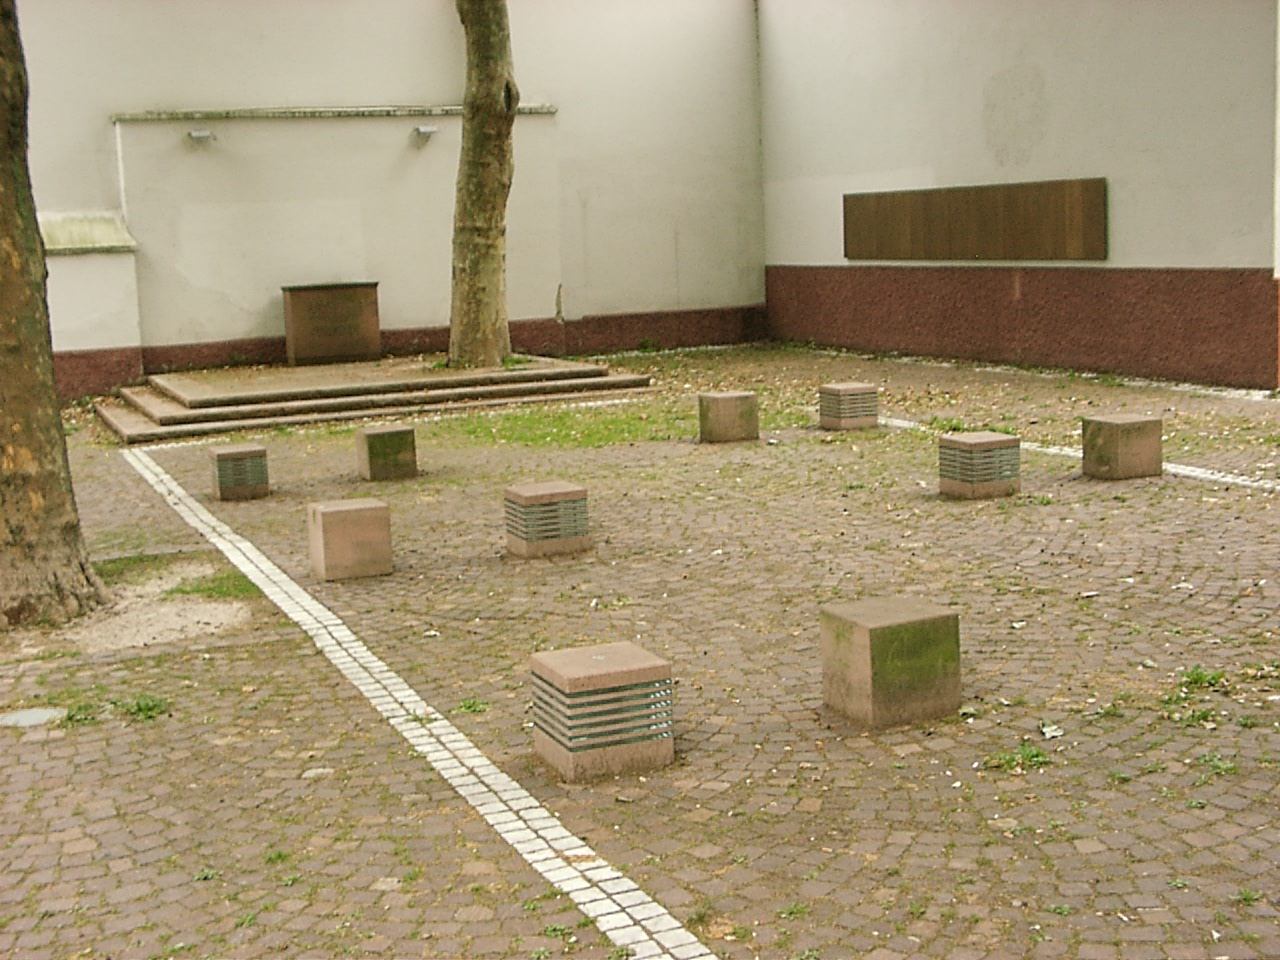 HD-Altstadt Synagogen Platz, Längsrichtung, weiße Pflasterung markiert den Grundriss.